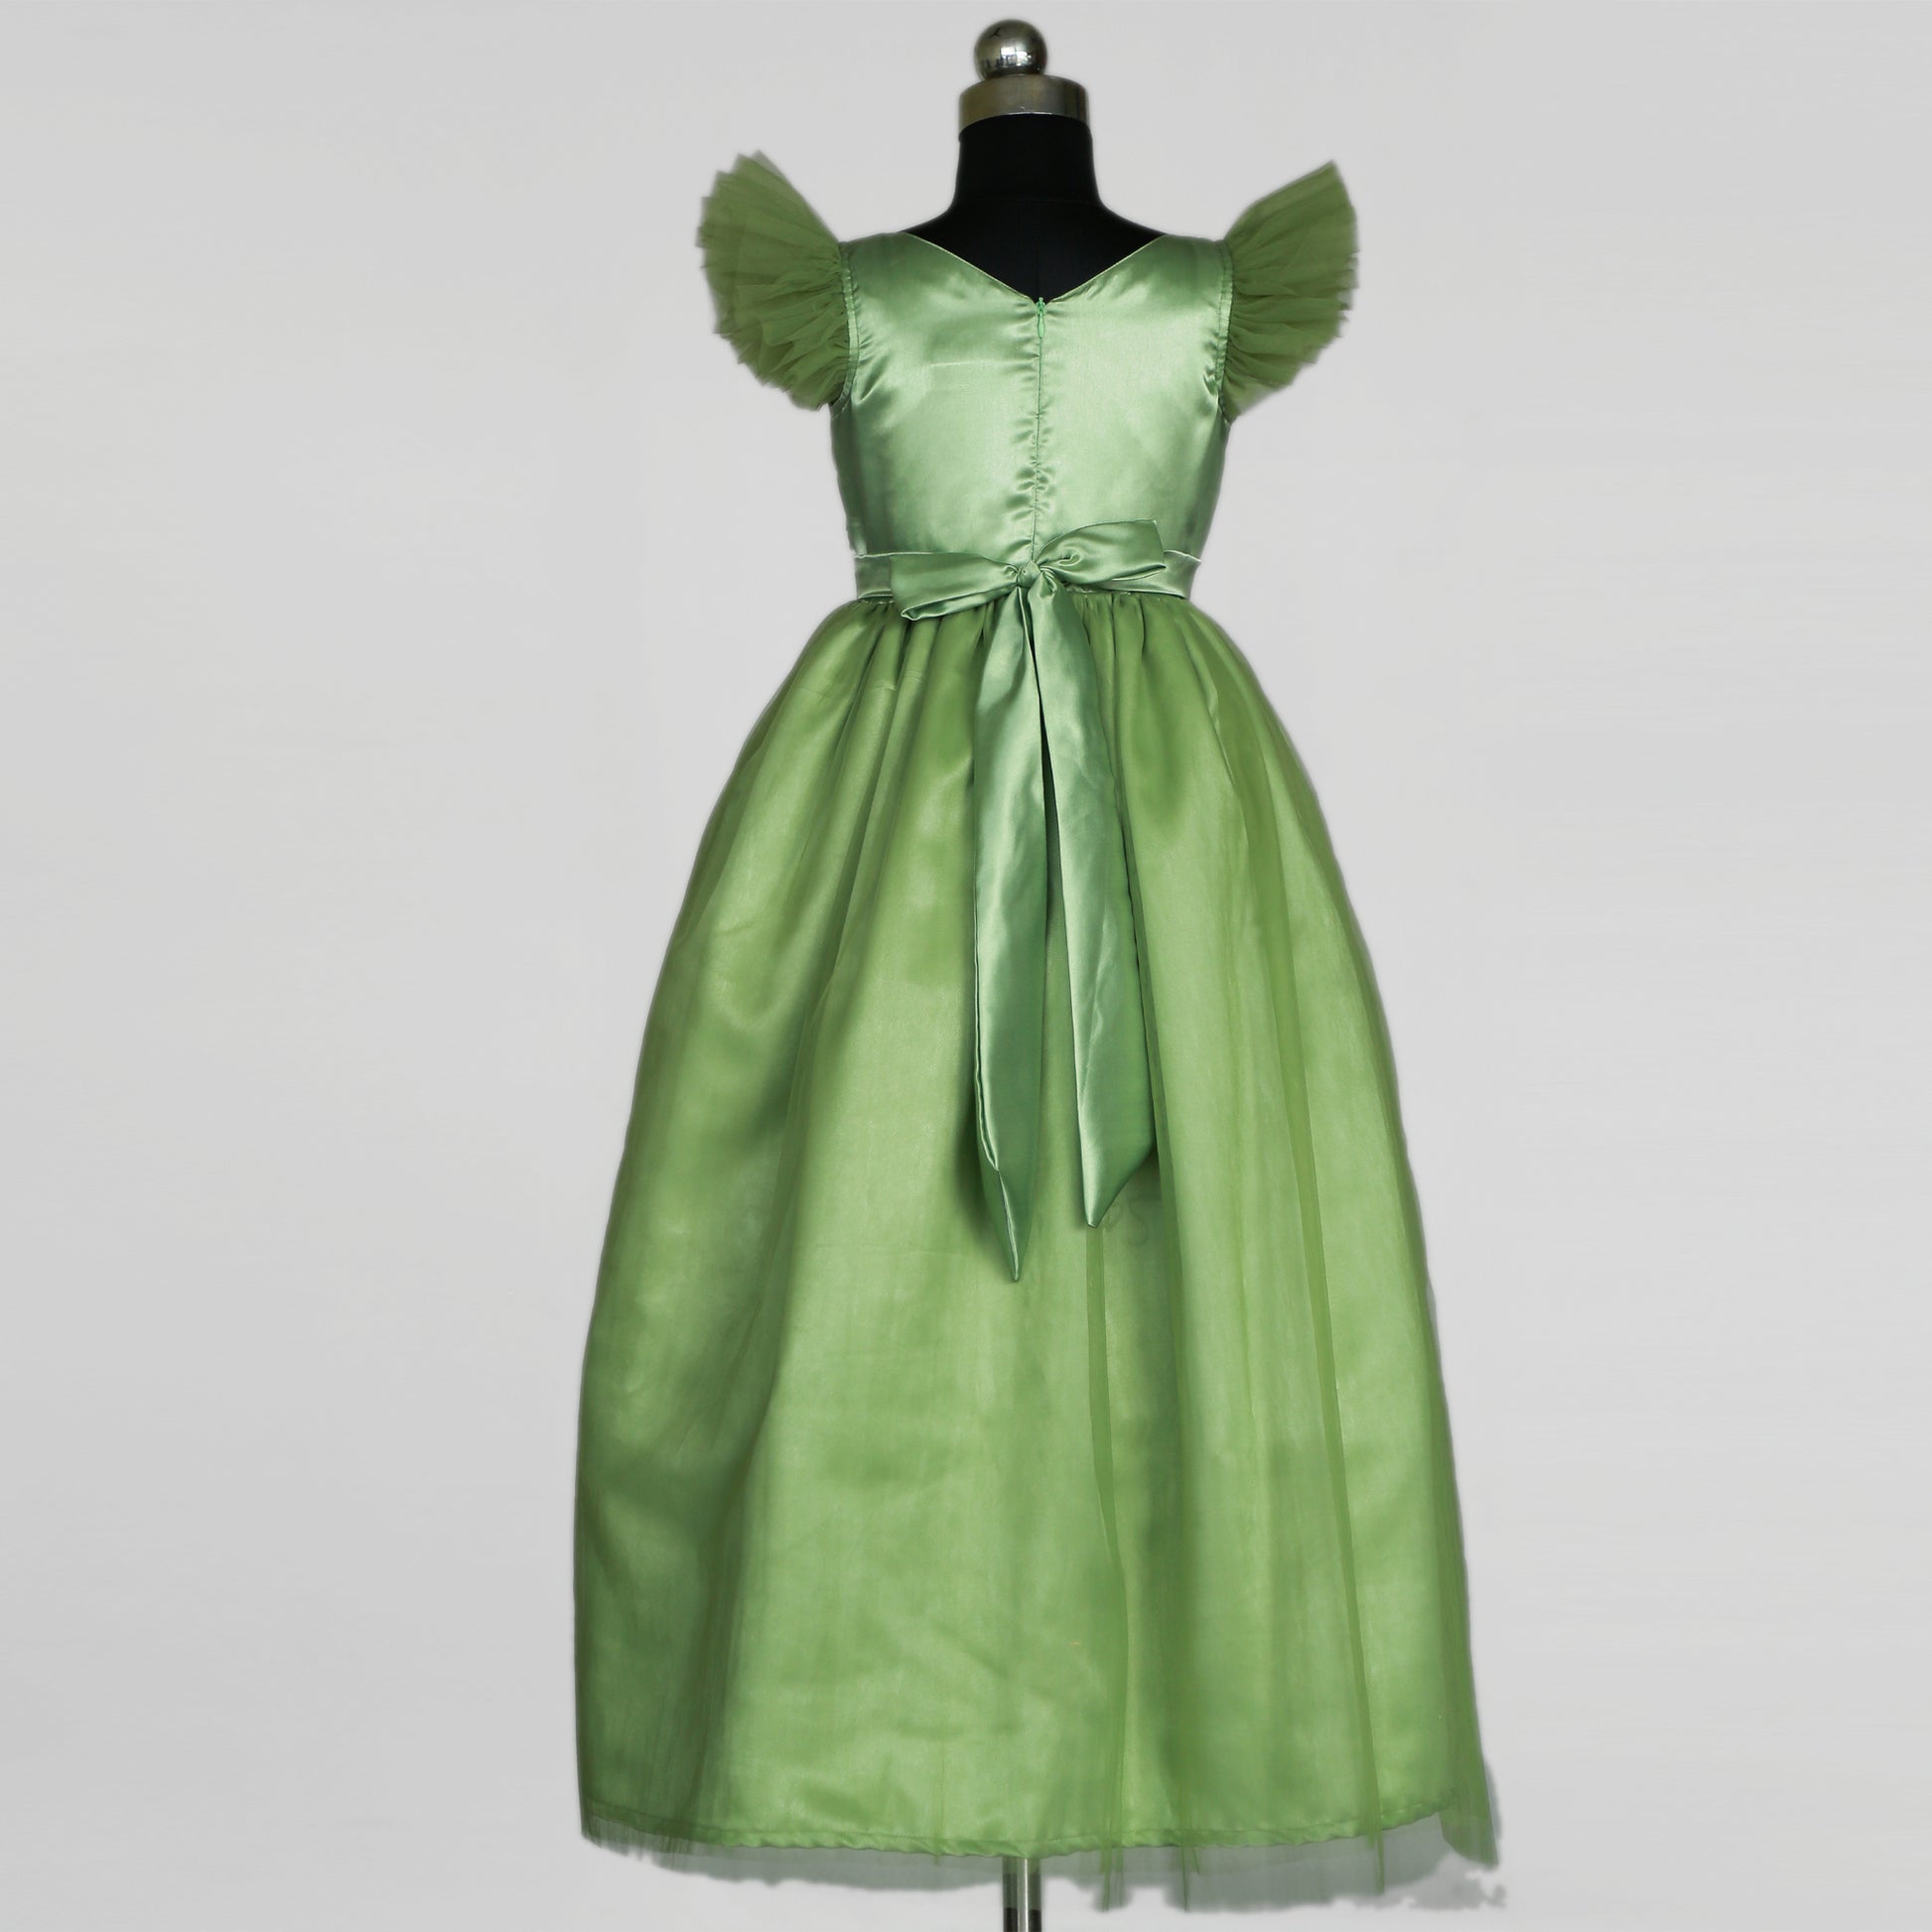 HEYKIDOO Girls Short Sleeve Embroiderer Layered Party Gown - Green - HEYKIDOO